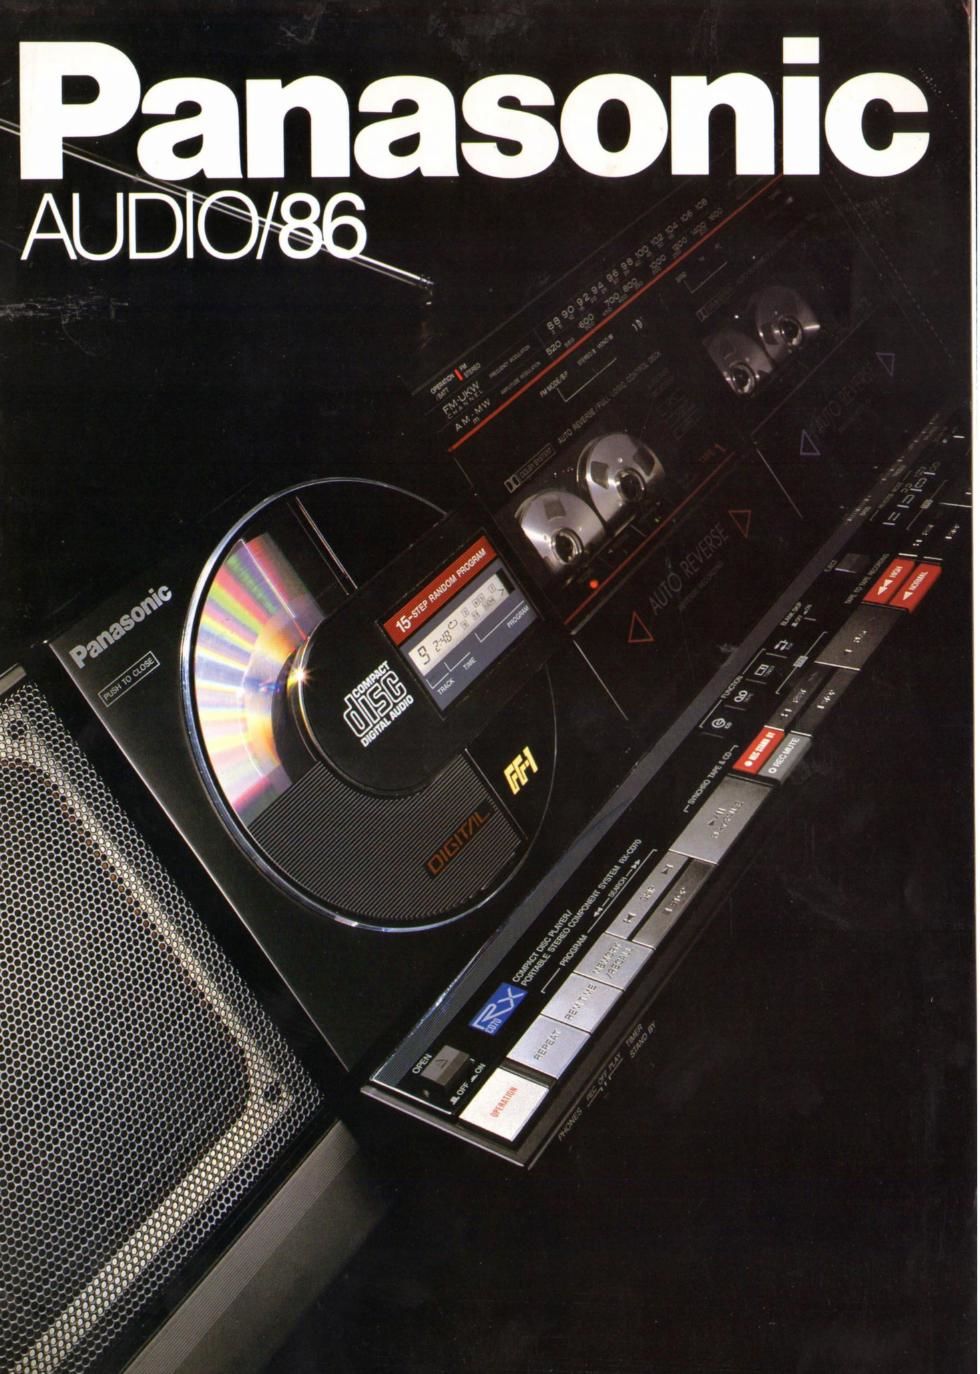 panasonic catalogs 1986 panasonic audio